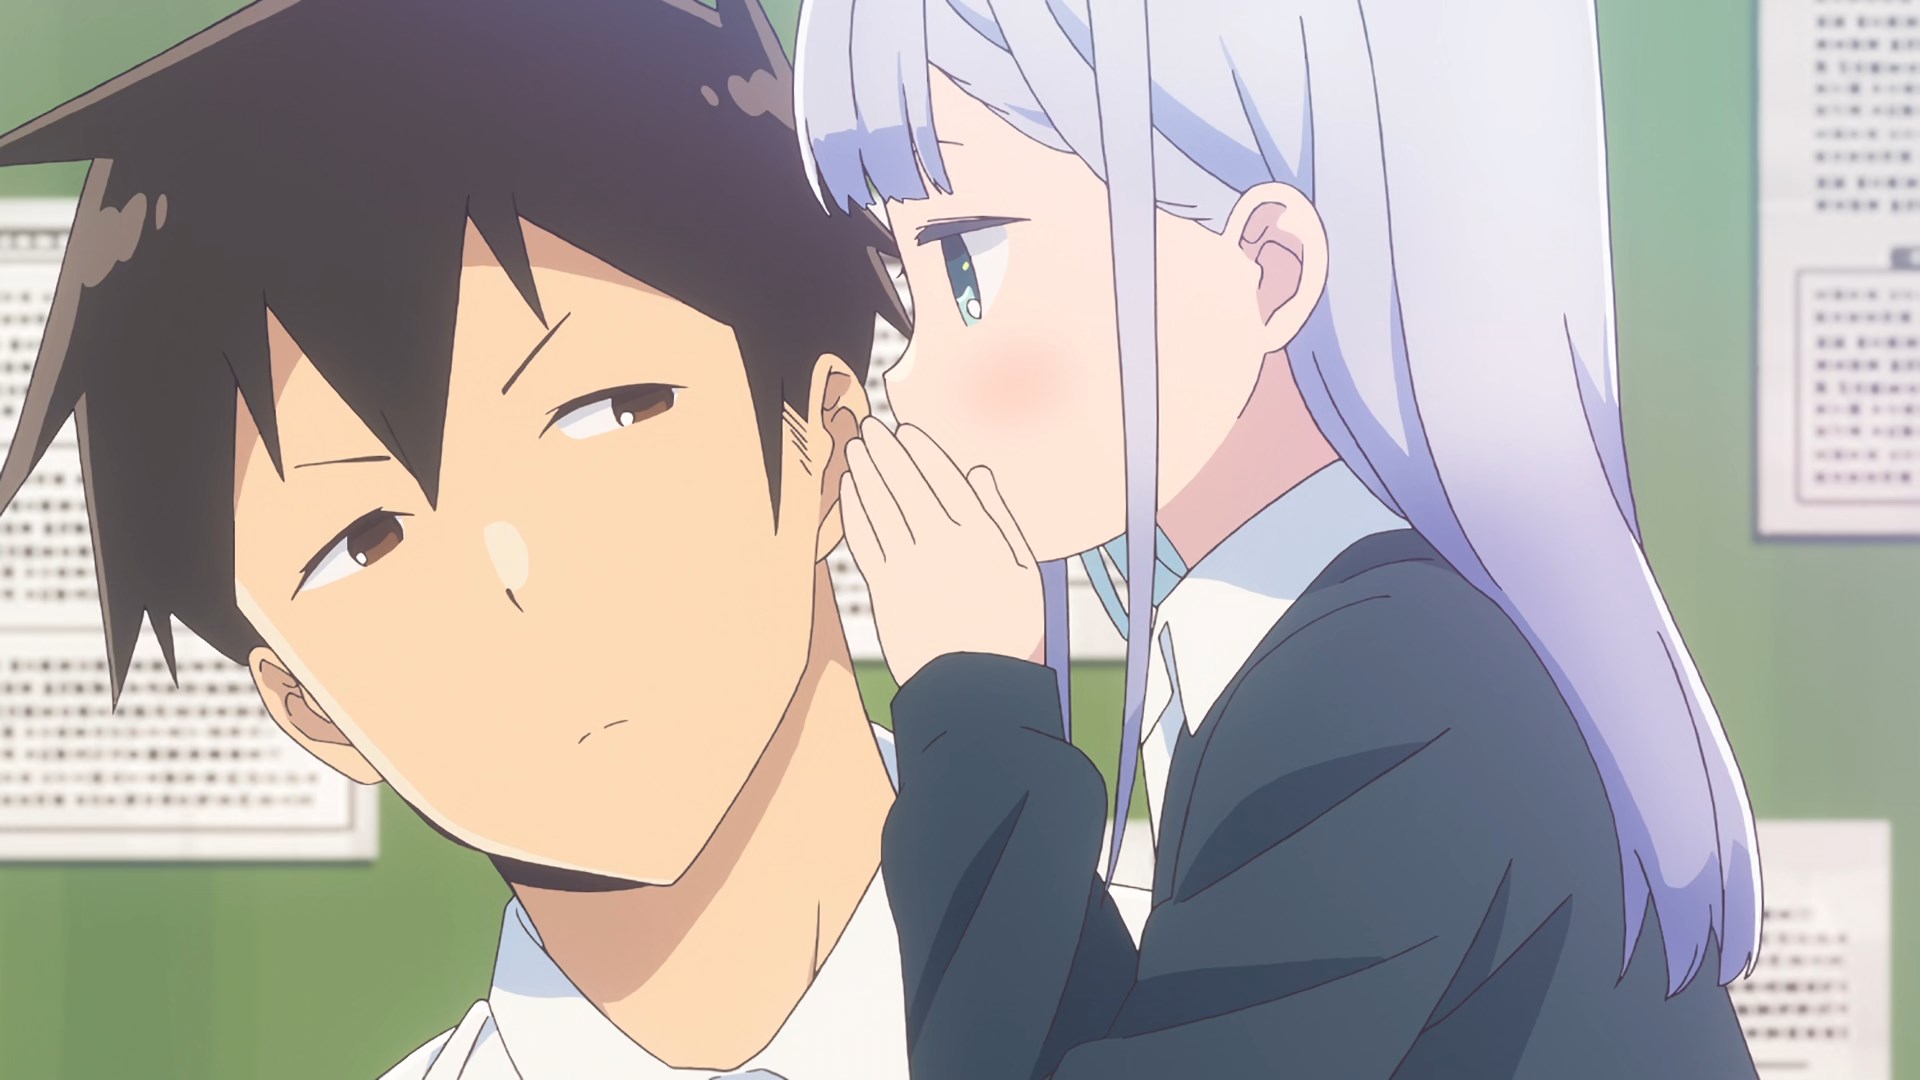 Aharen-san whispering in Raido's ear